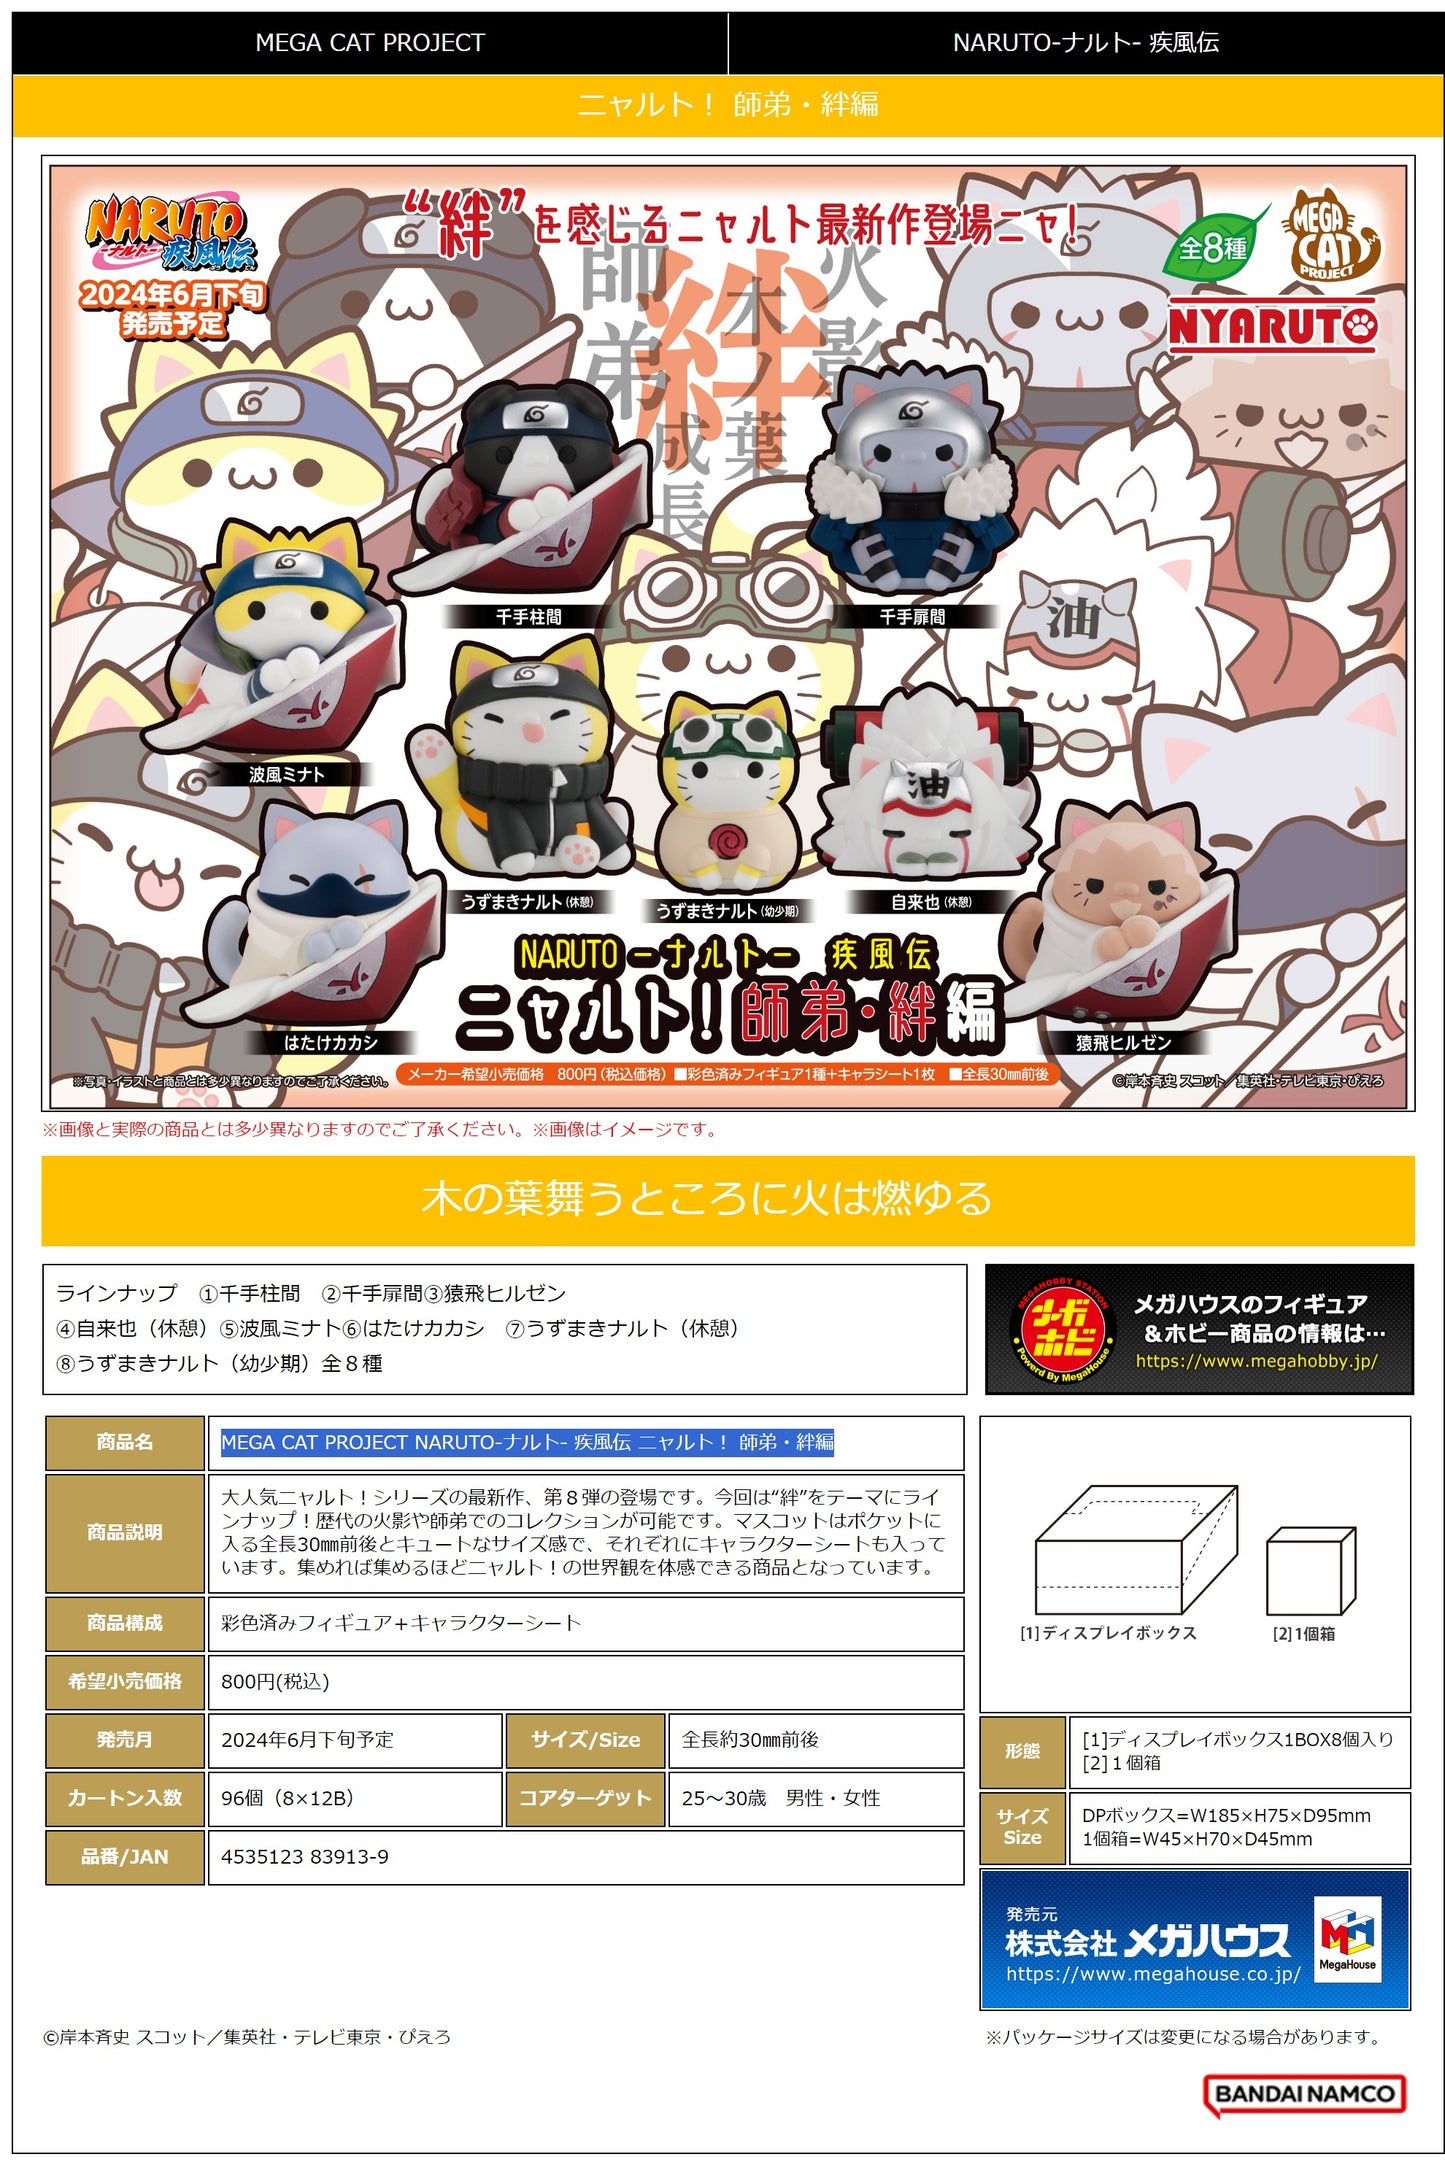 Mega Cat Project Naruto Shippuden Nyaruto! The bond between master and disciple ver.